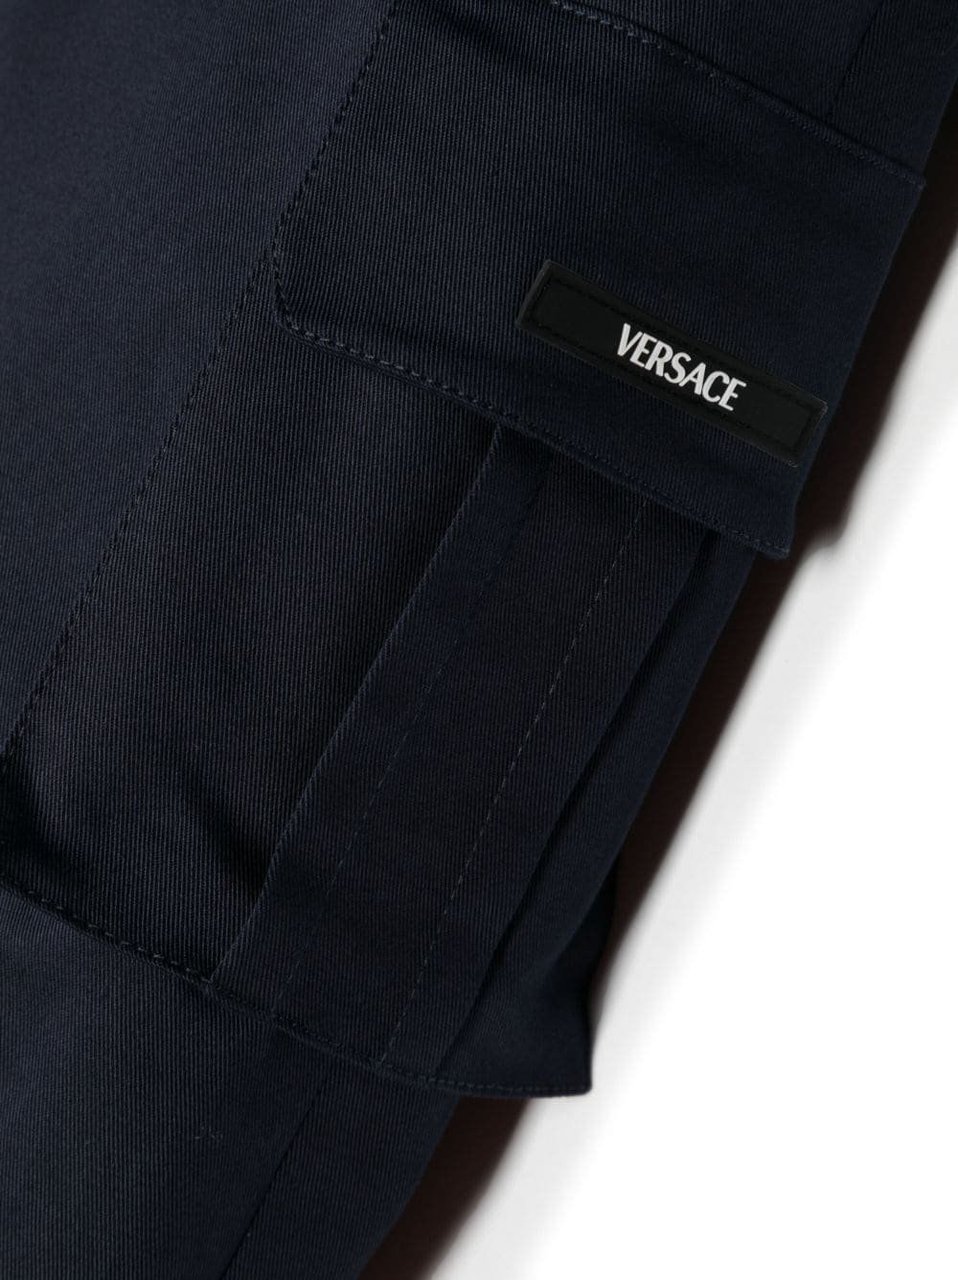 Versace informal pant black Zwart